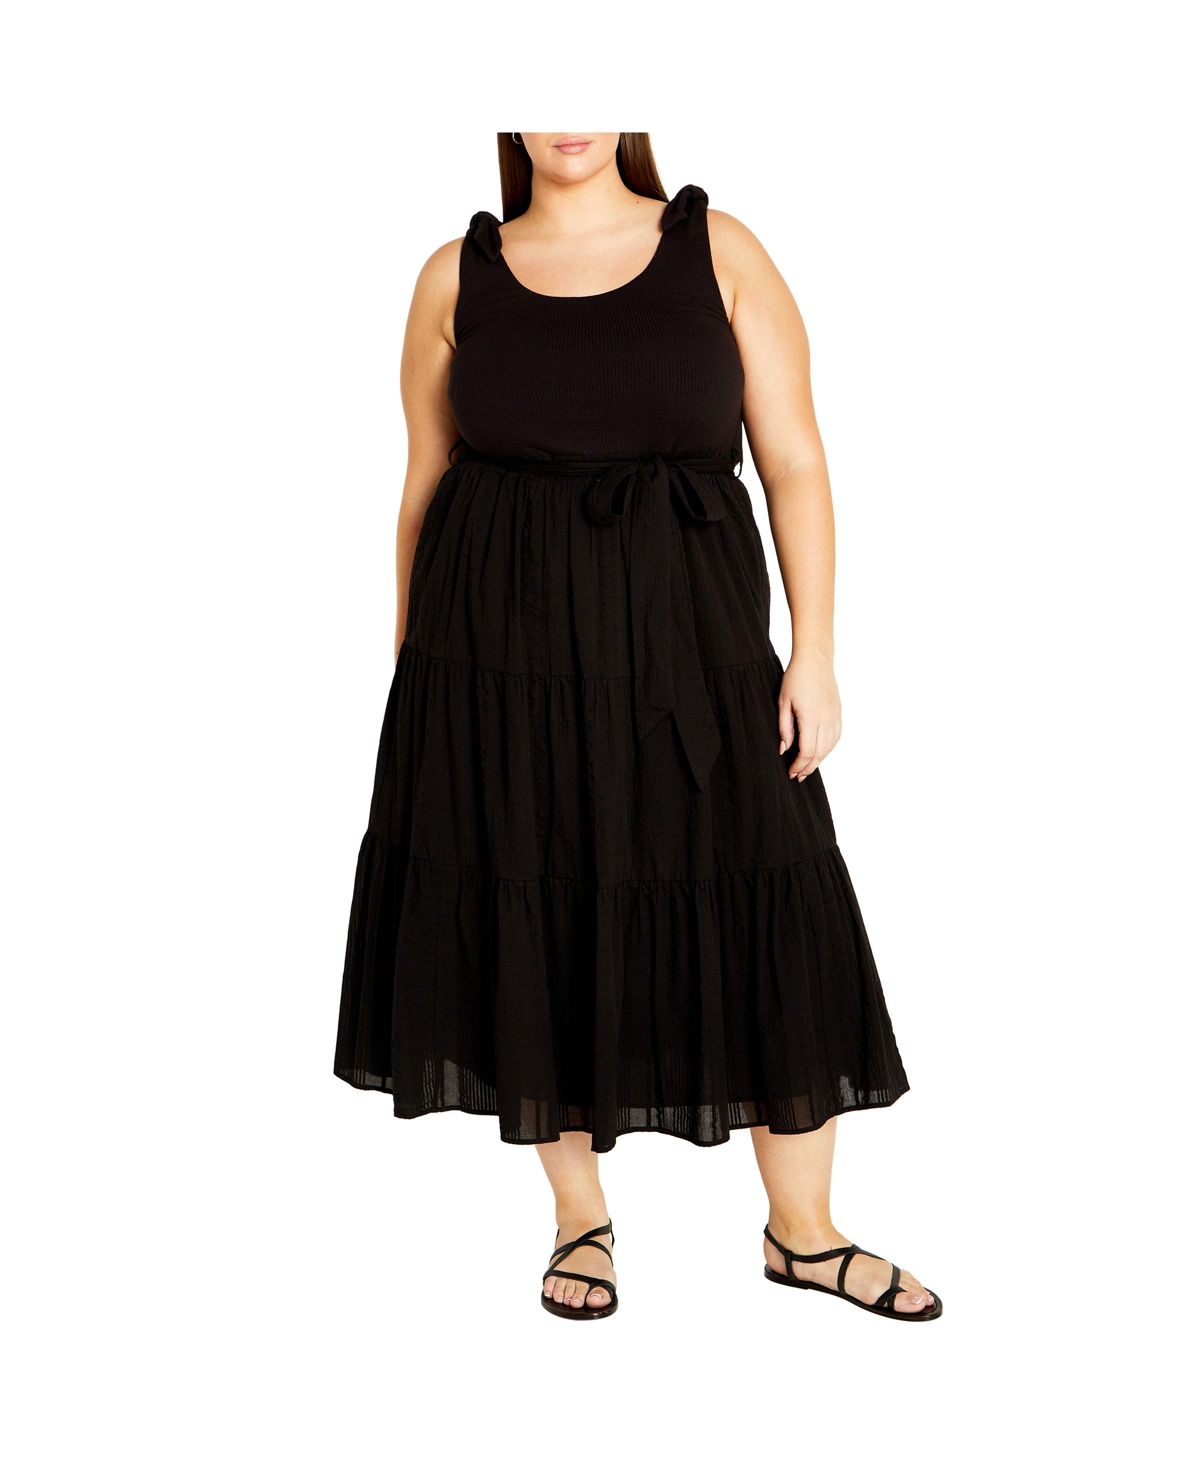 Plus Size Hallie Dress - Black